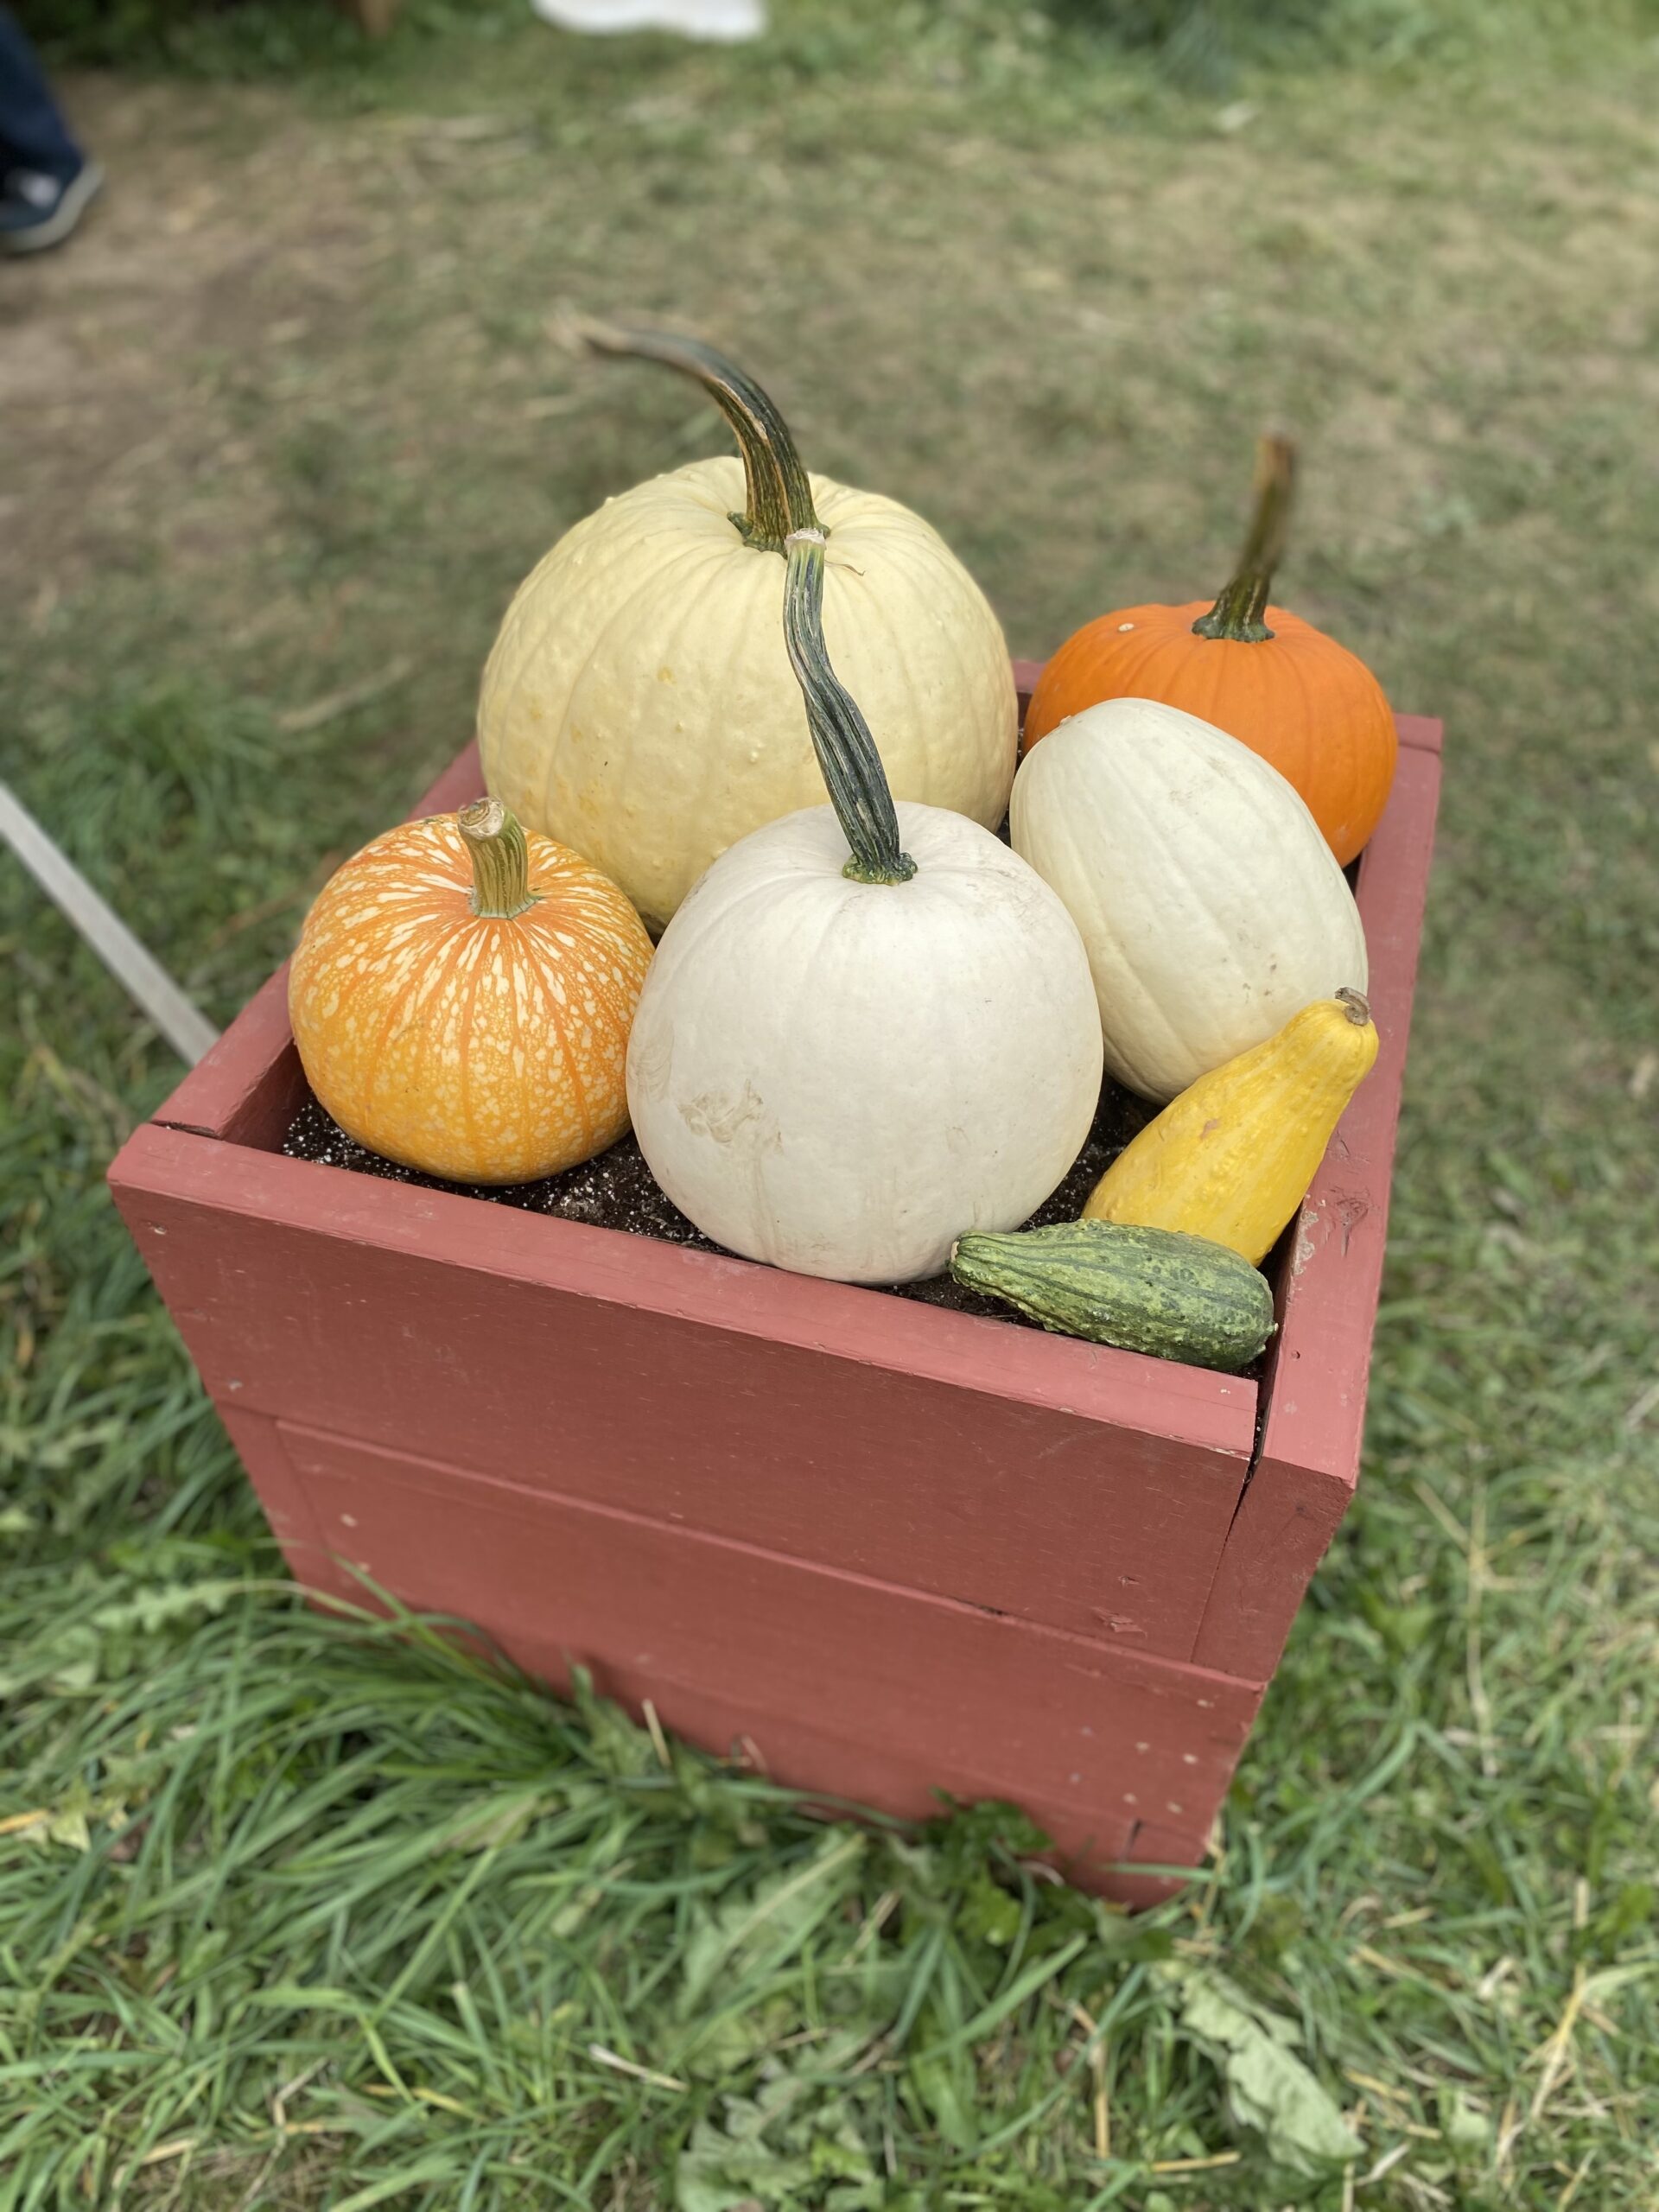 Pumpkins, Pumpkin patch, Barrel, Farm Visit, green grass, Gord, mini pumpkins